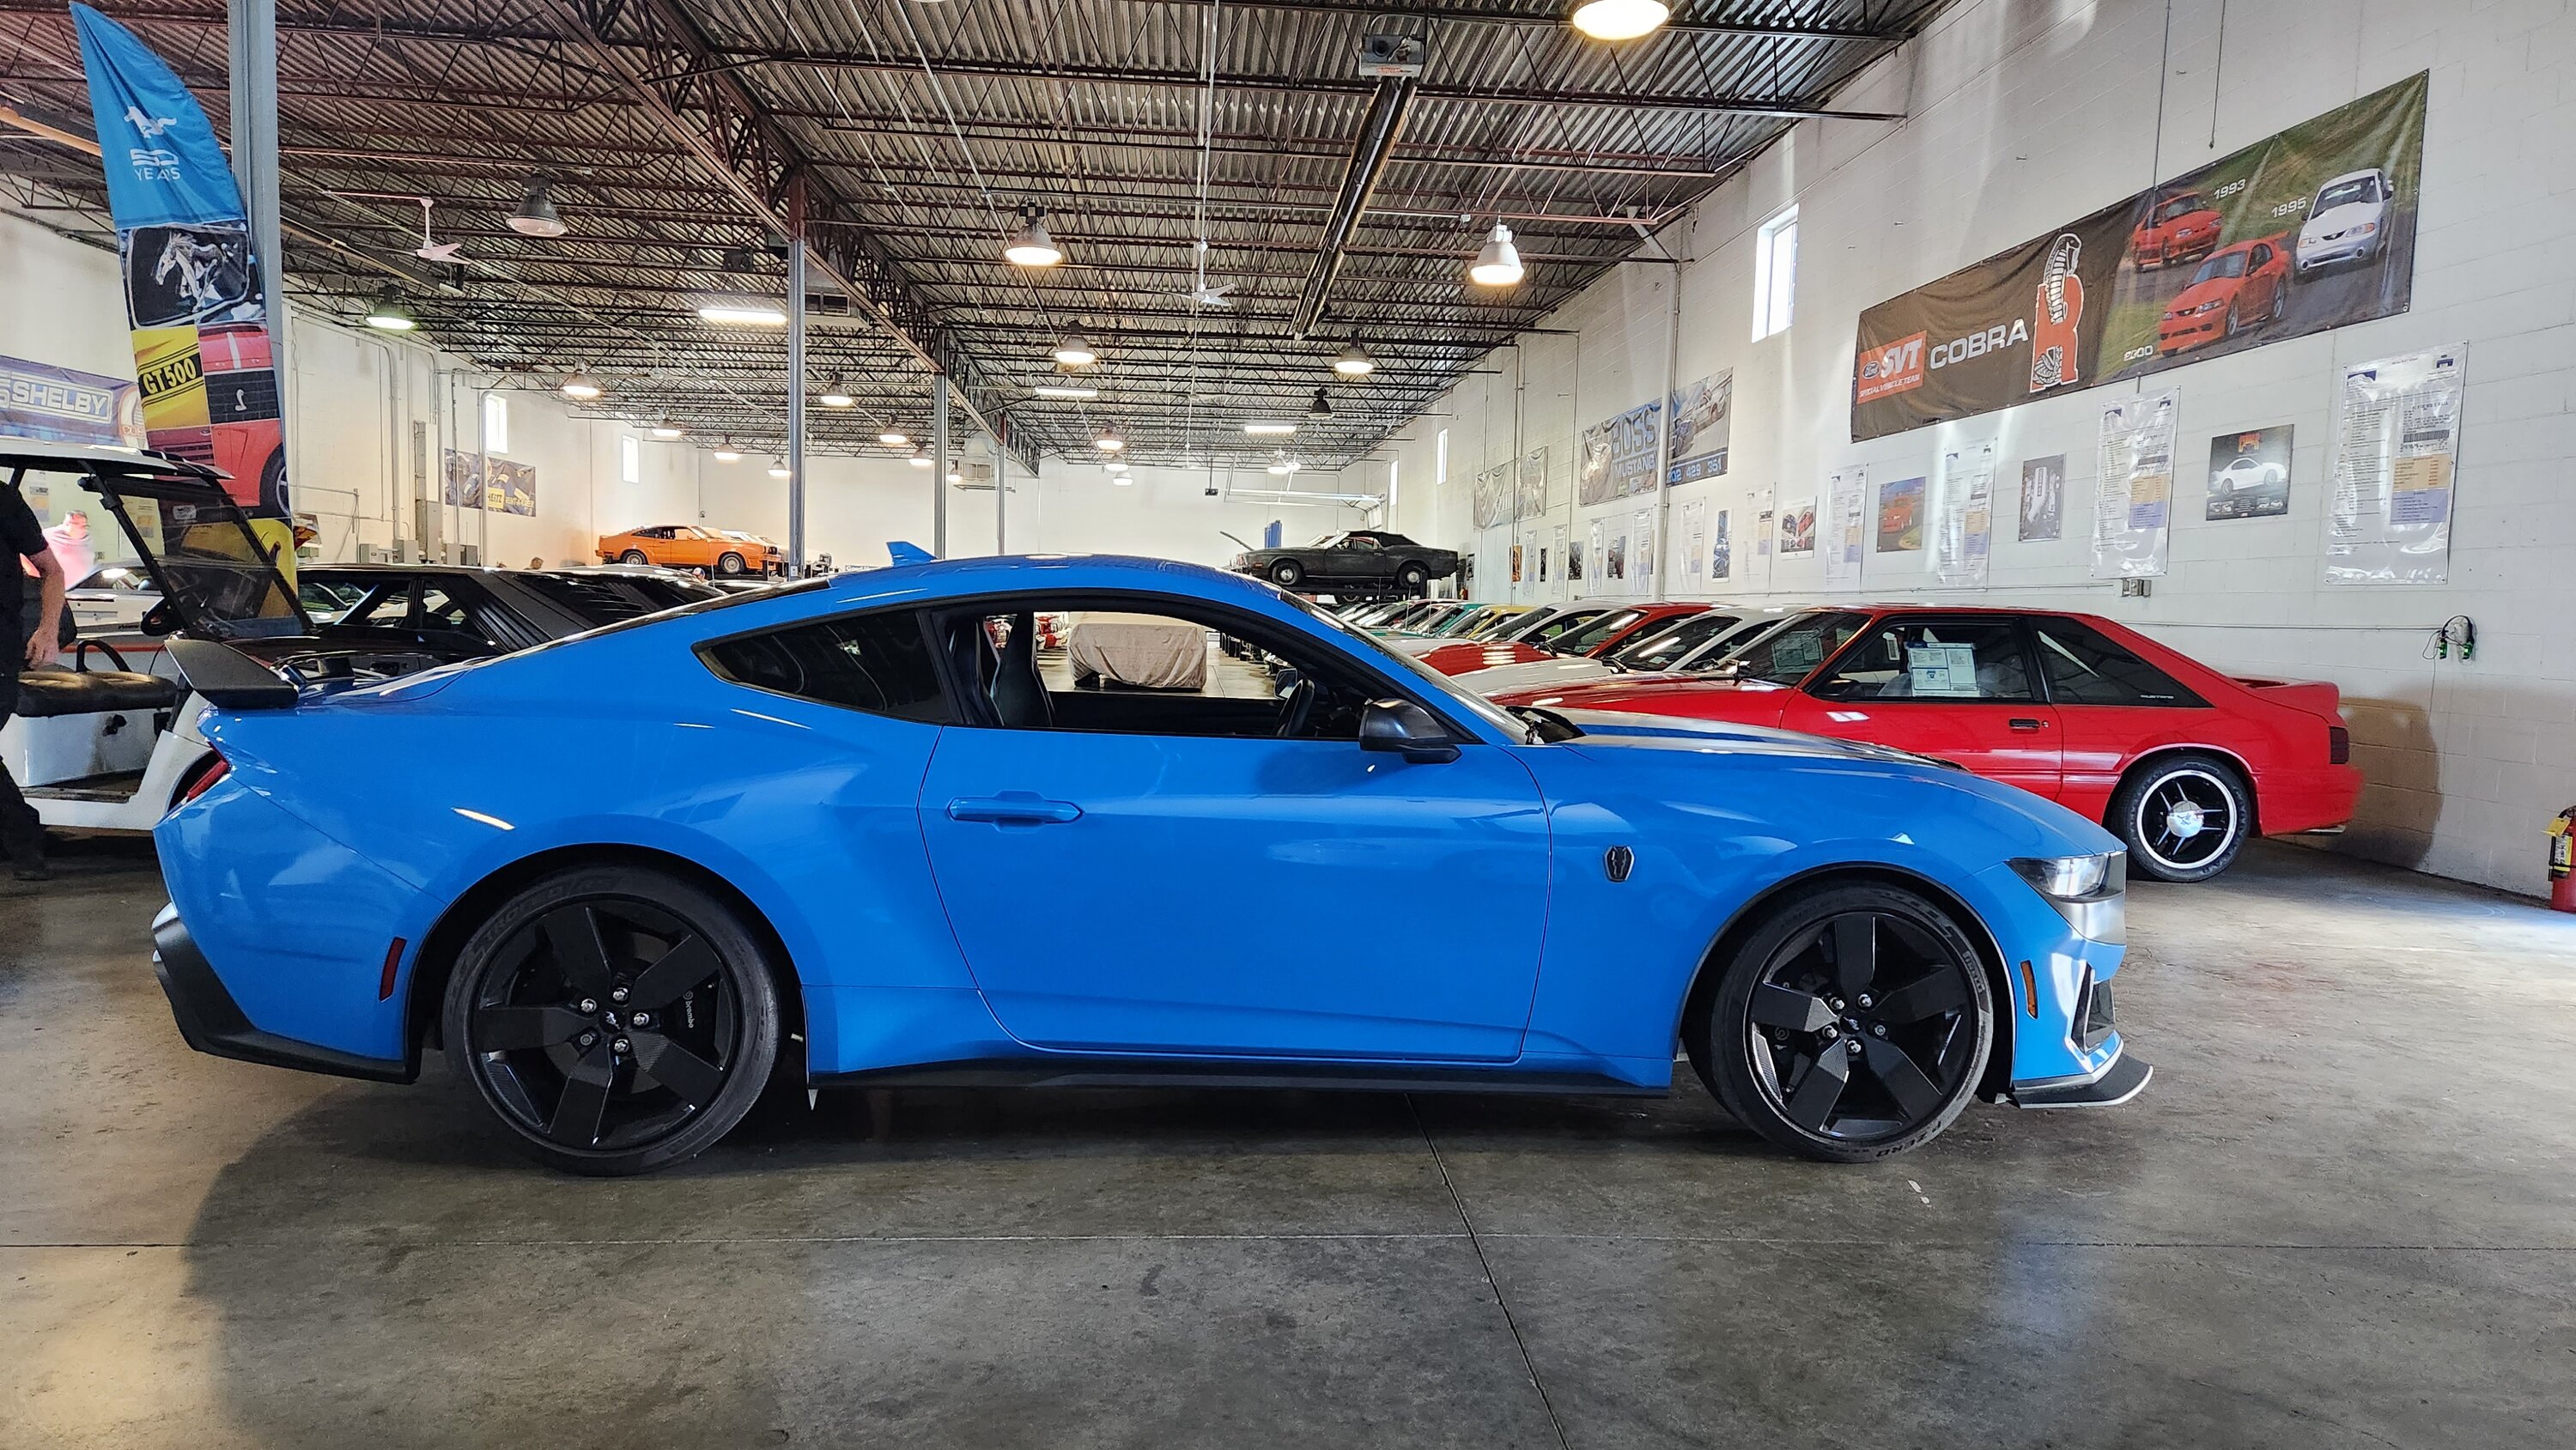 S650 Mustang Grabber Blue Dark Horse with Handling Pack in Detroit Area 20230818_102320